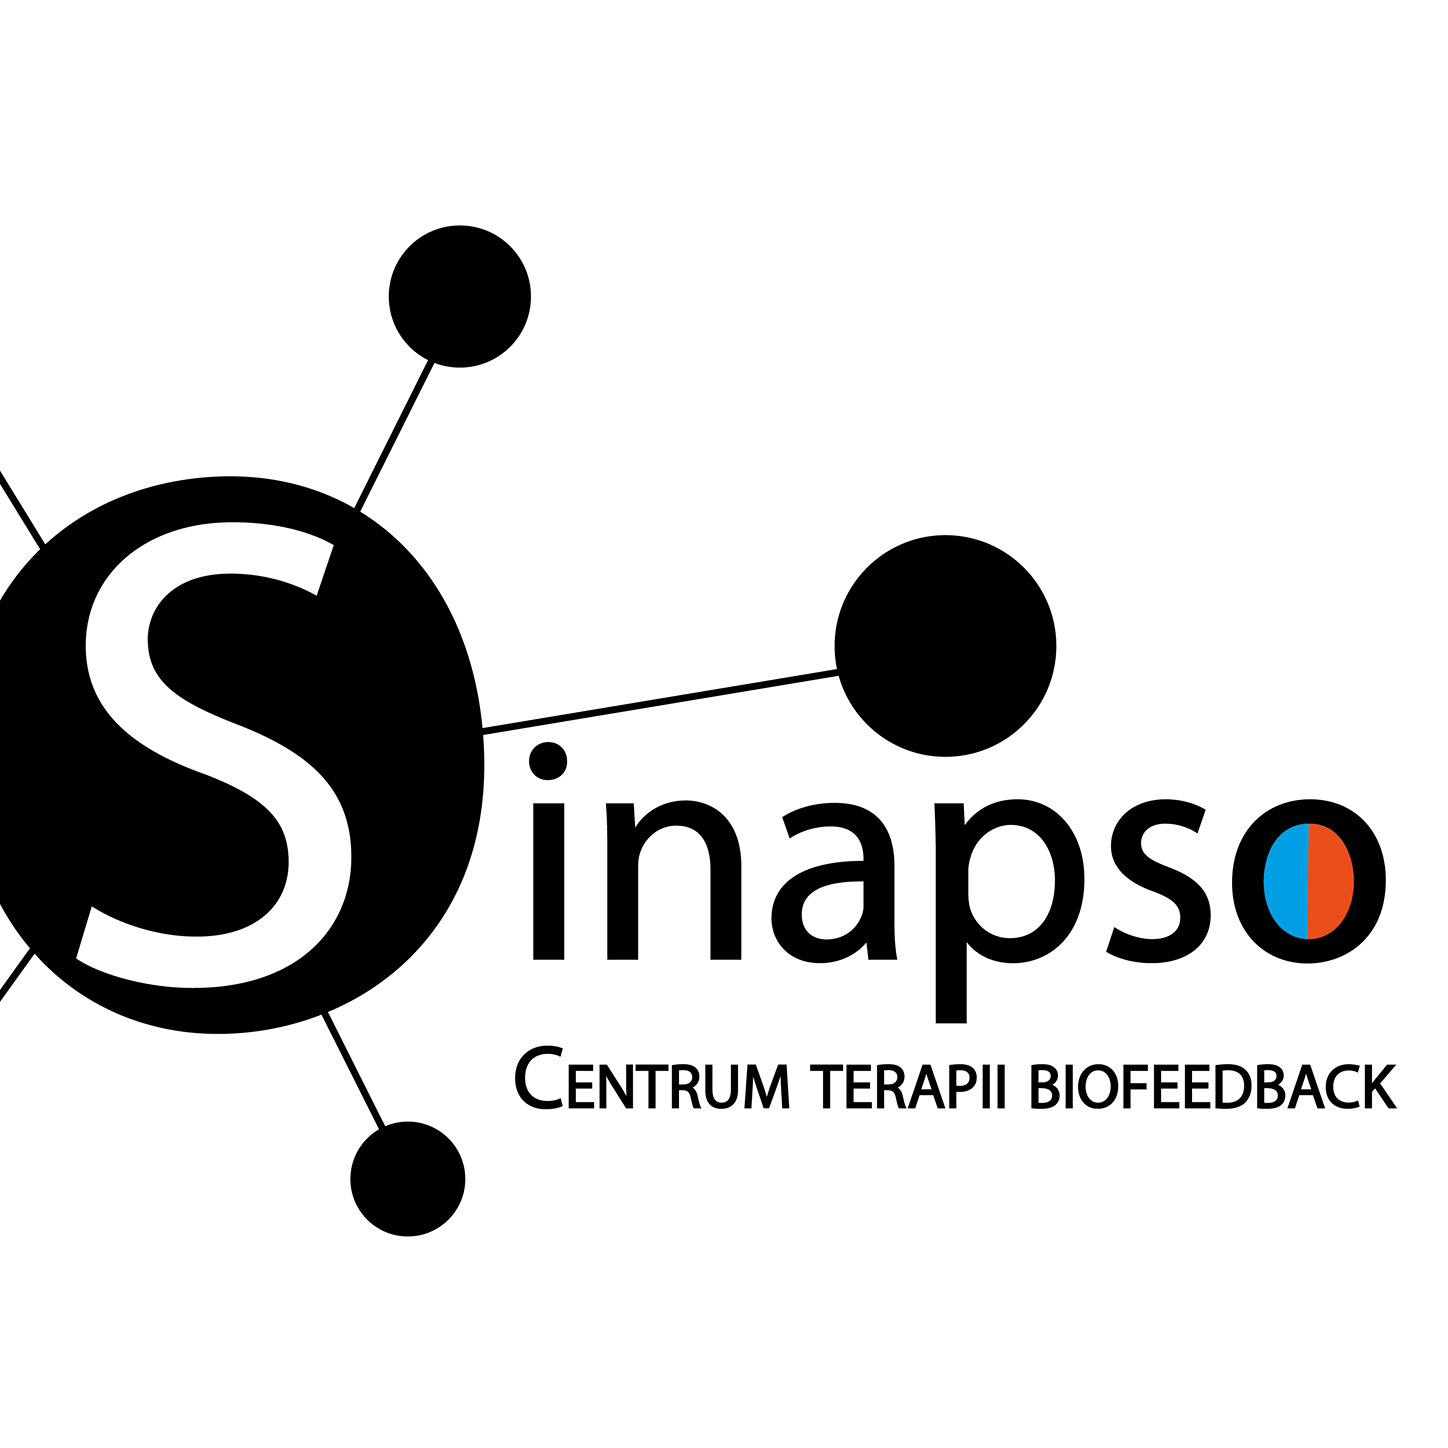 EEG | Biofeedback | HEG | HRV - Sinapso